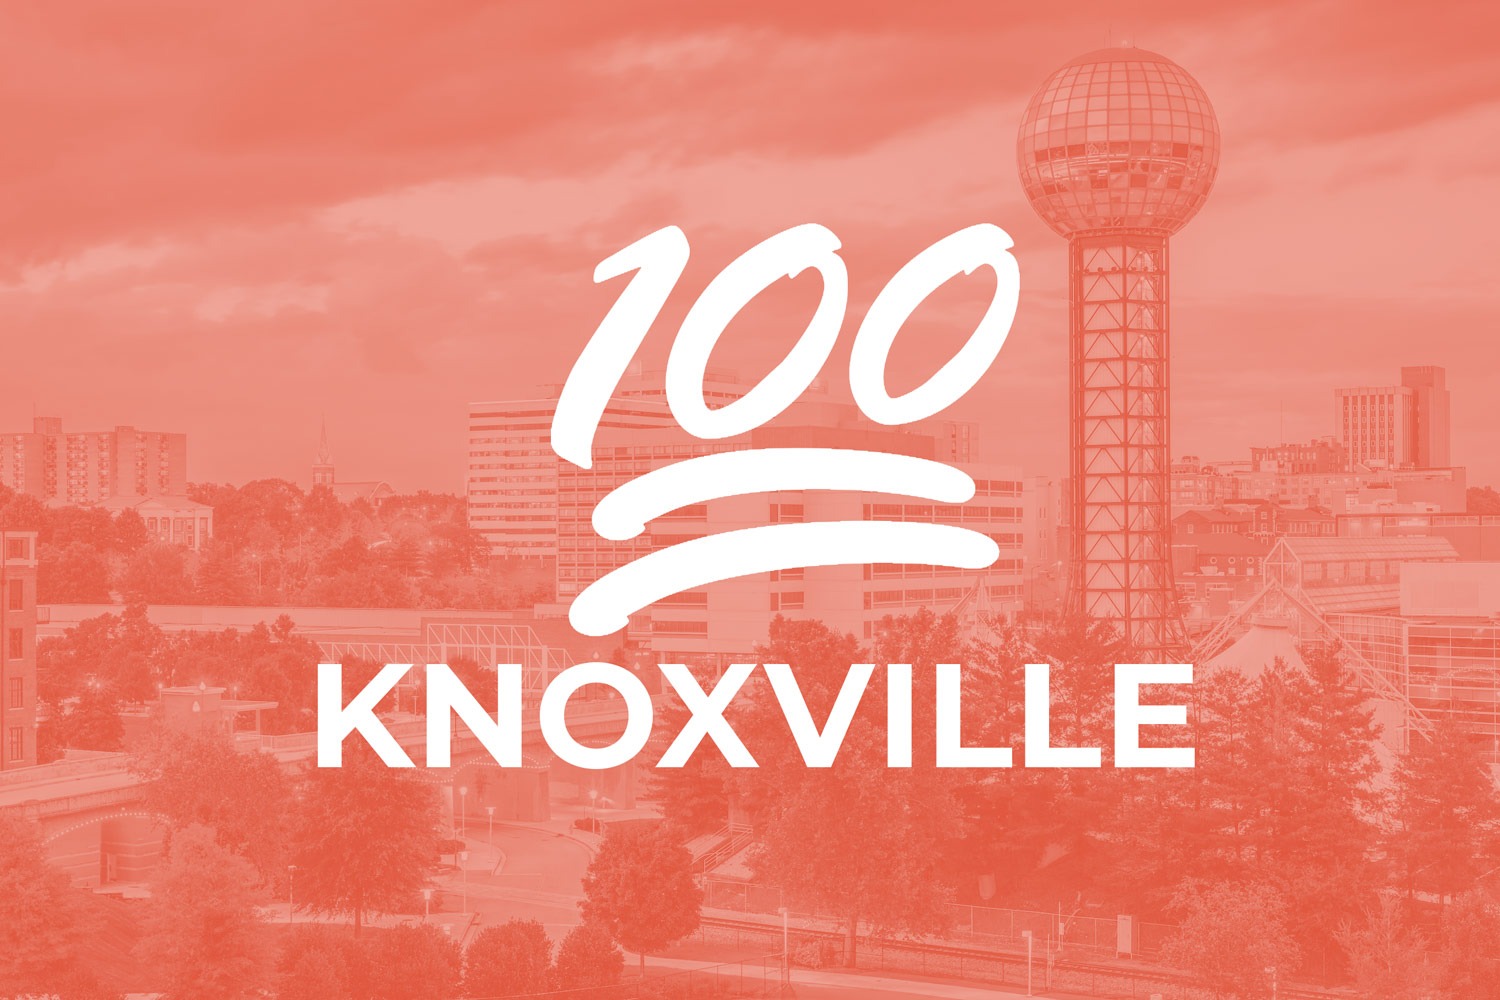 100 knoxville external link